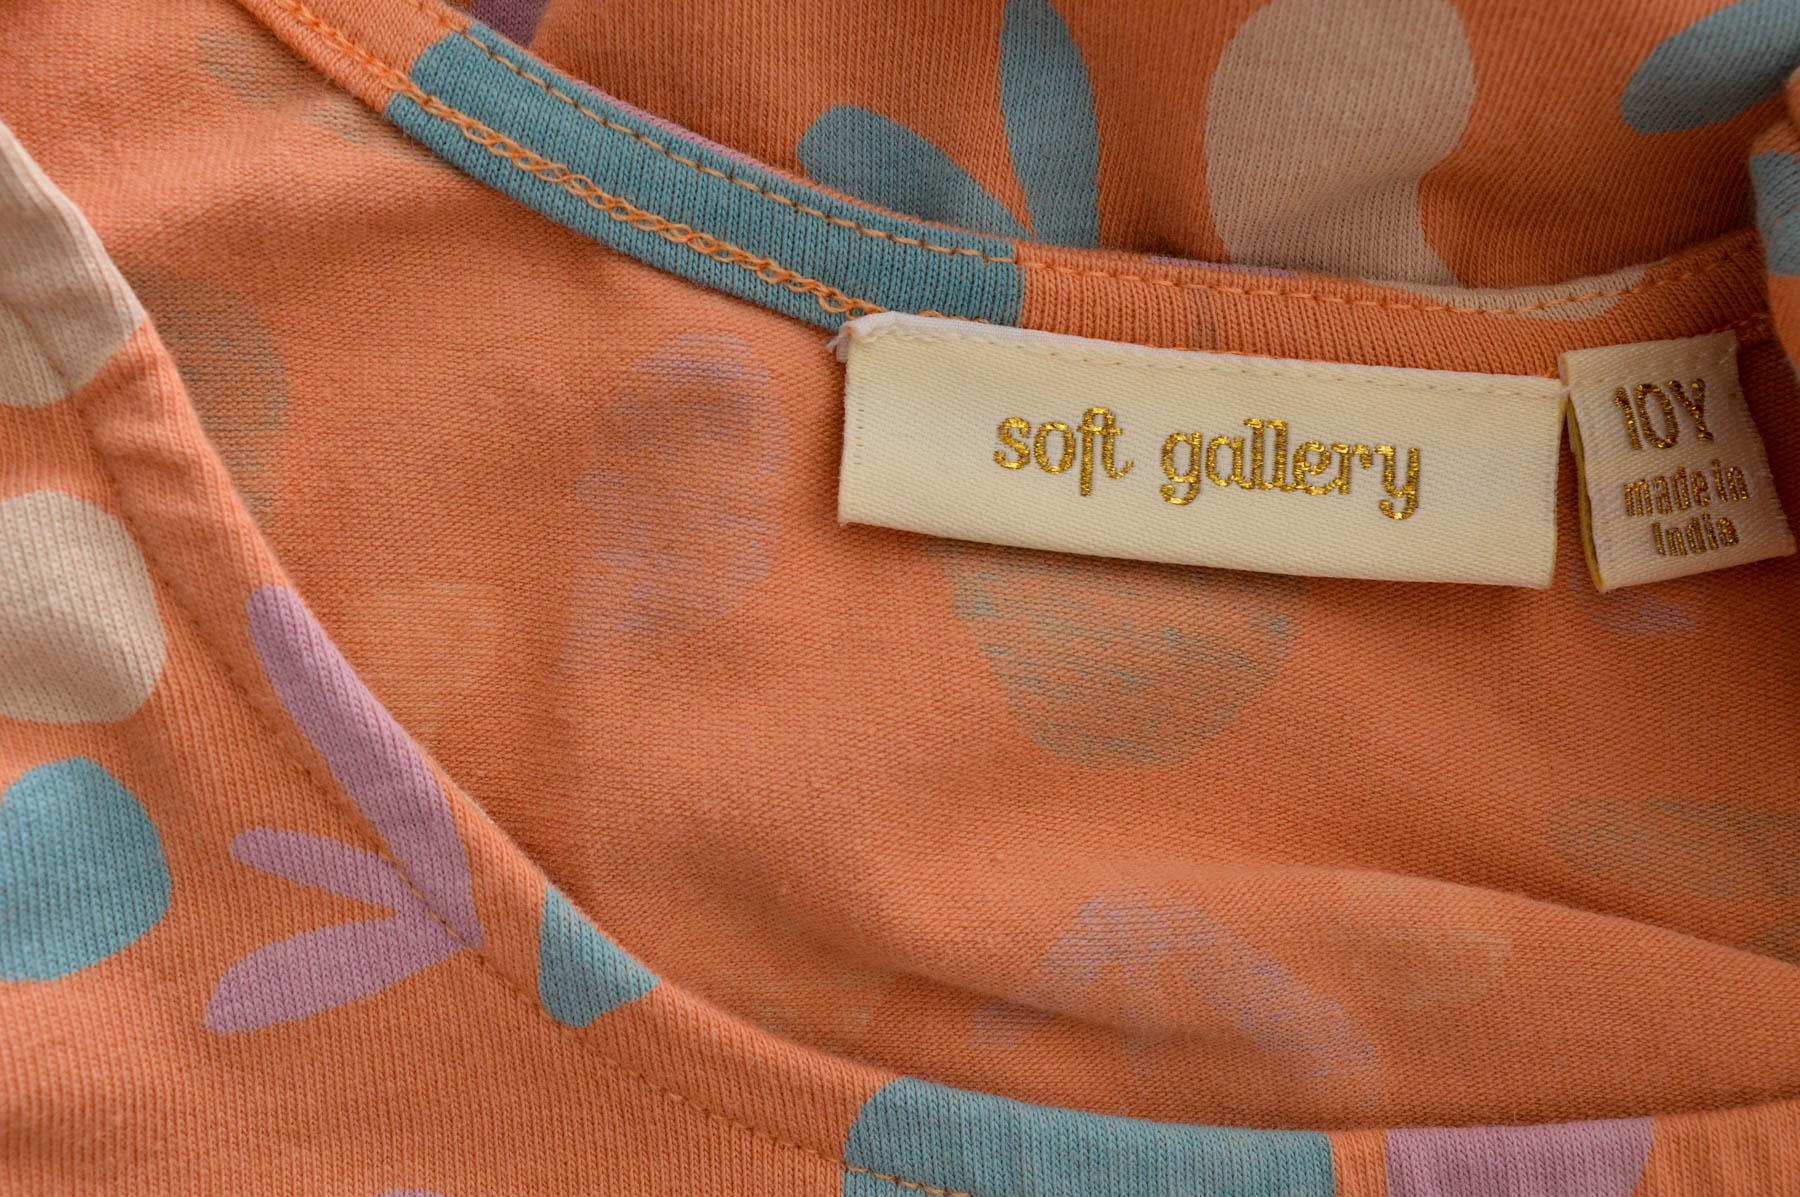 Child's dress - Soft Gallery - 2